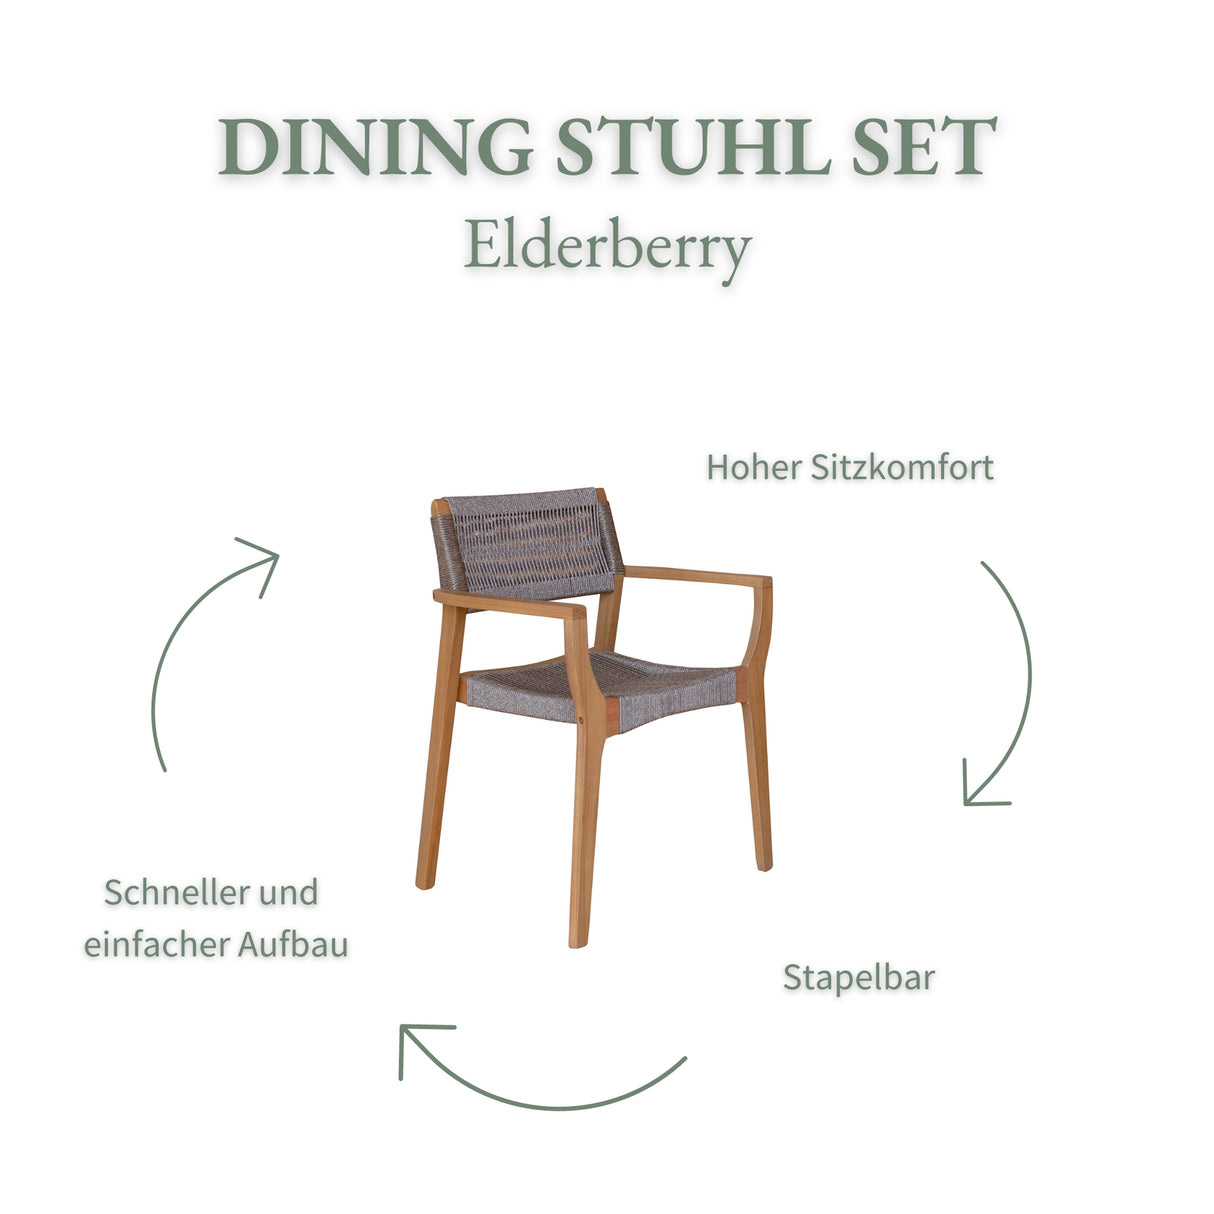 Dining Stuhl Set Elderberry aus Eukalyptusholz 2 Stück in Braun